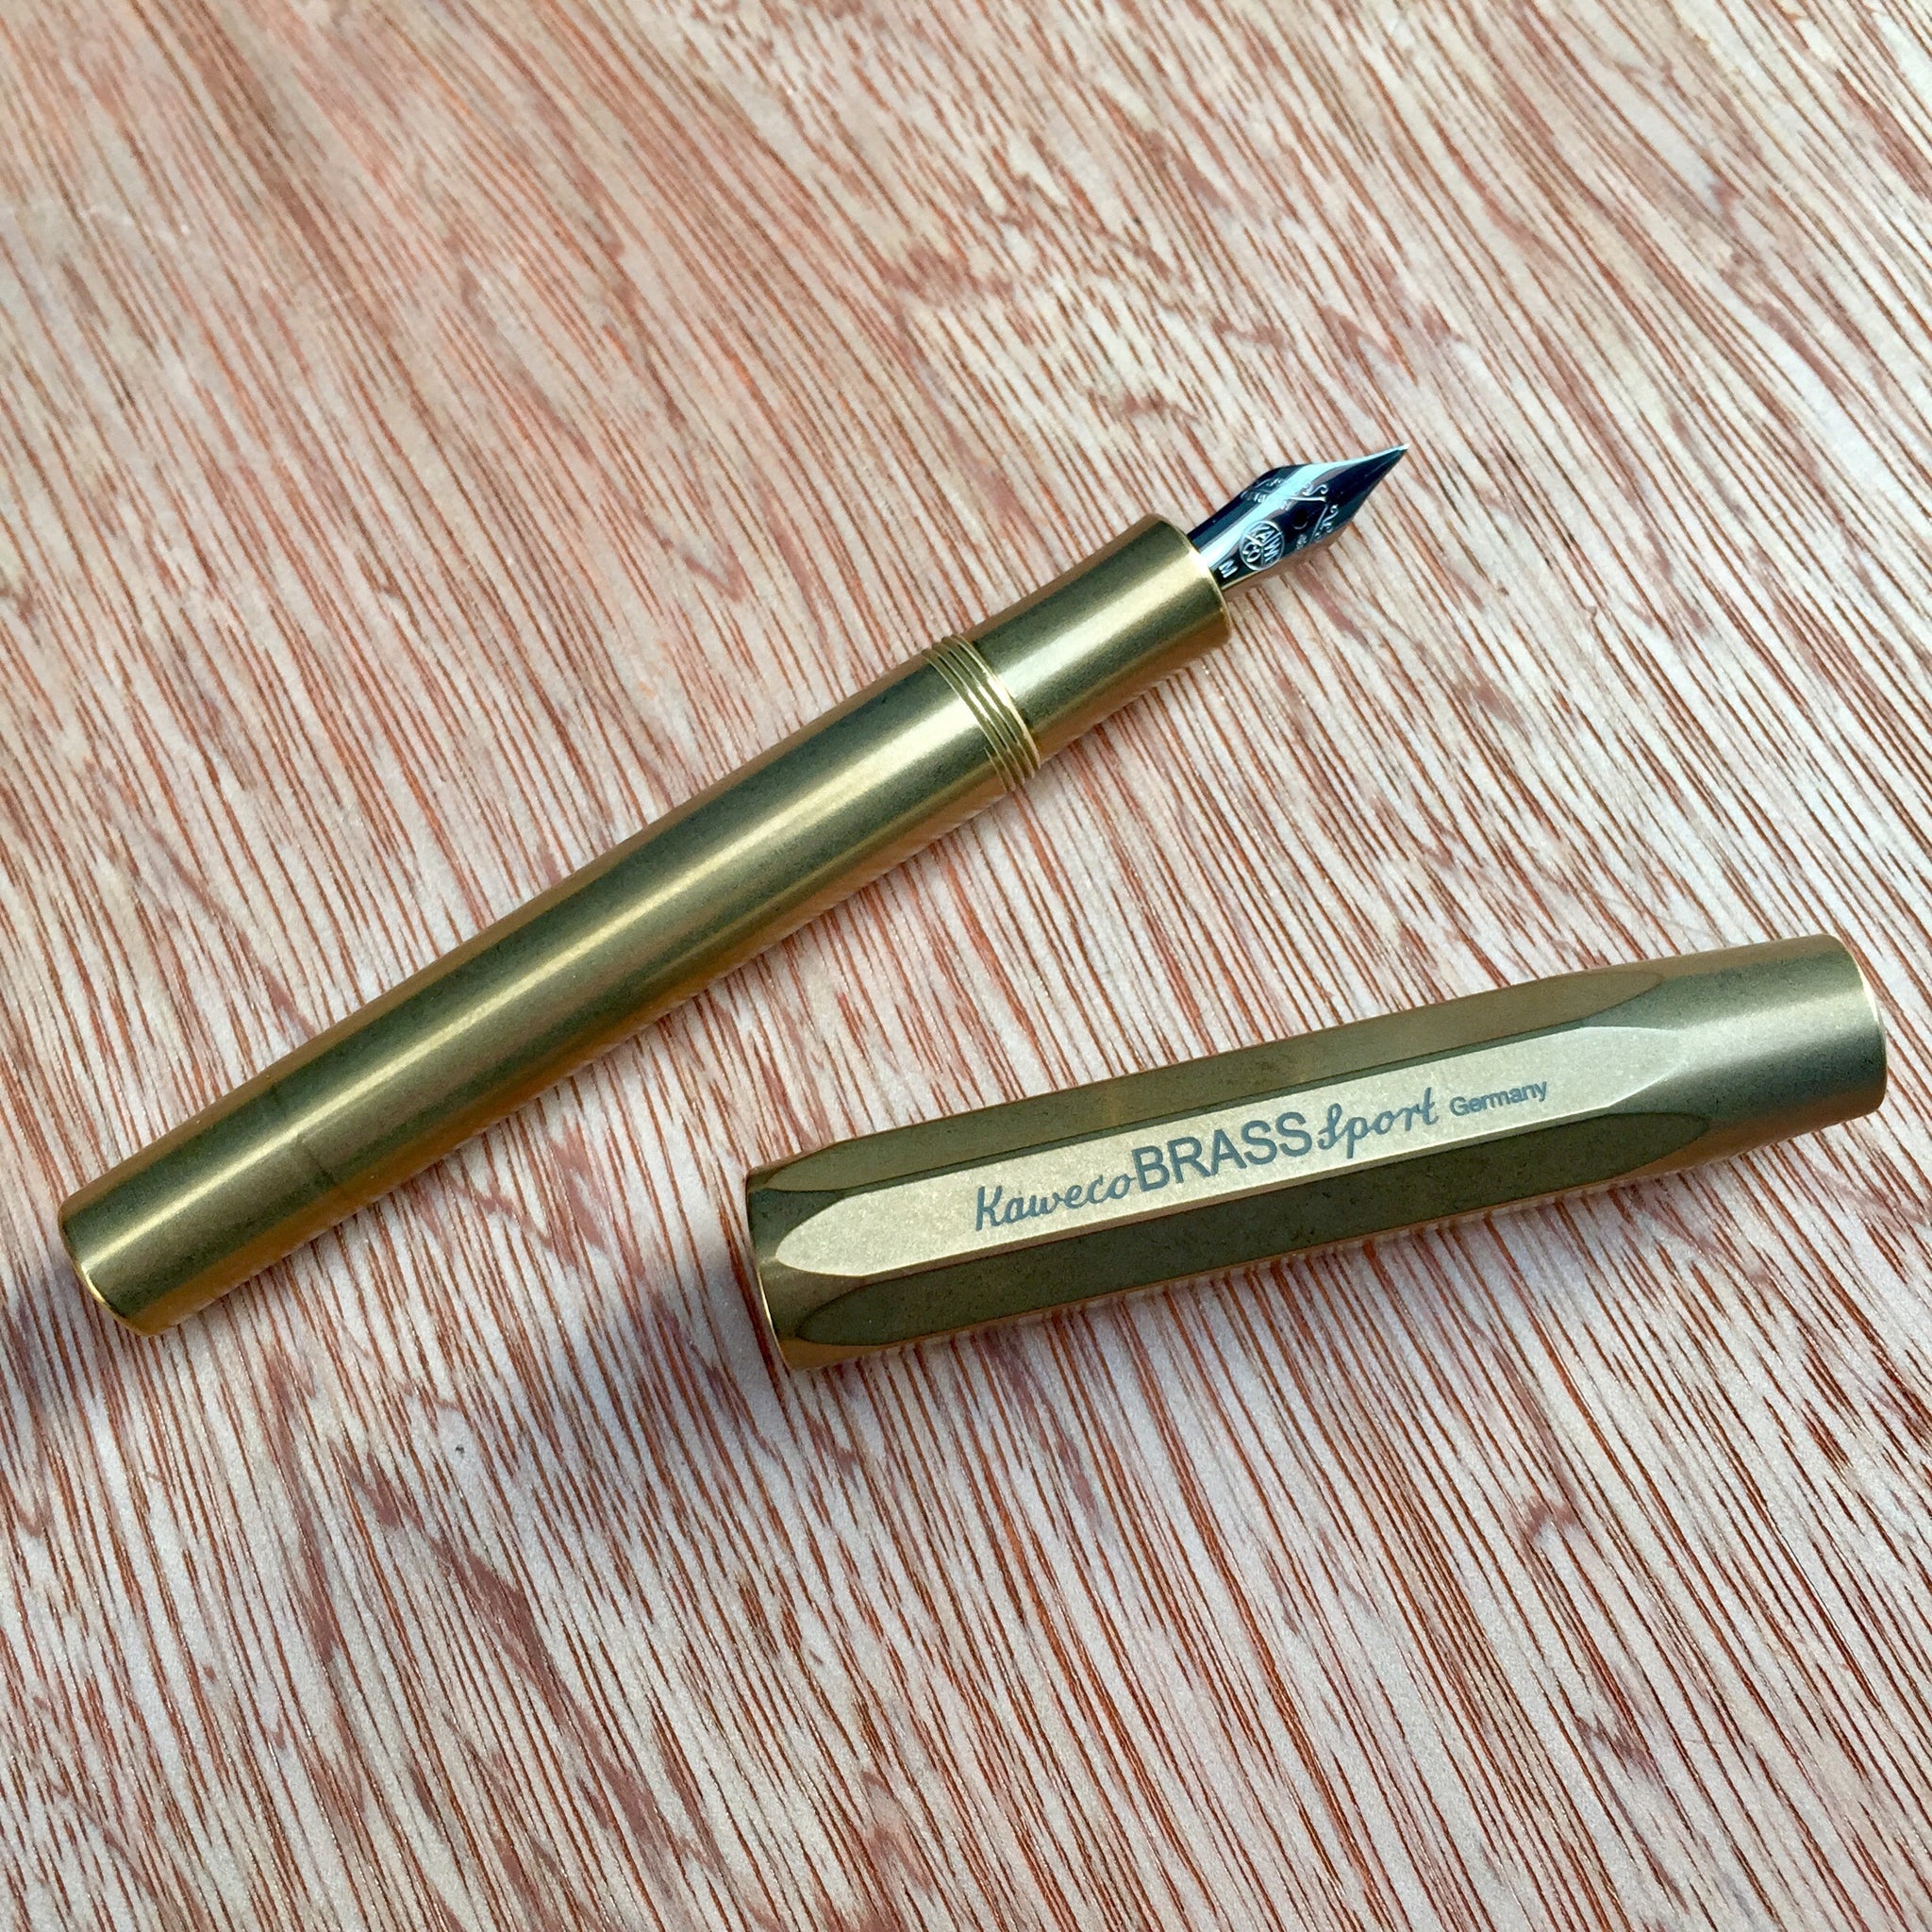 Kaweco Brass Sport fountain pen review - The Pen Company Blog